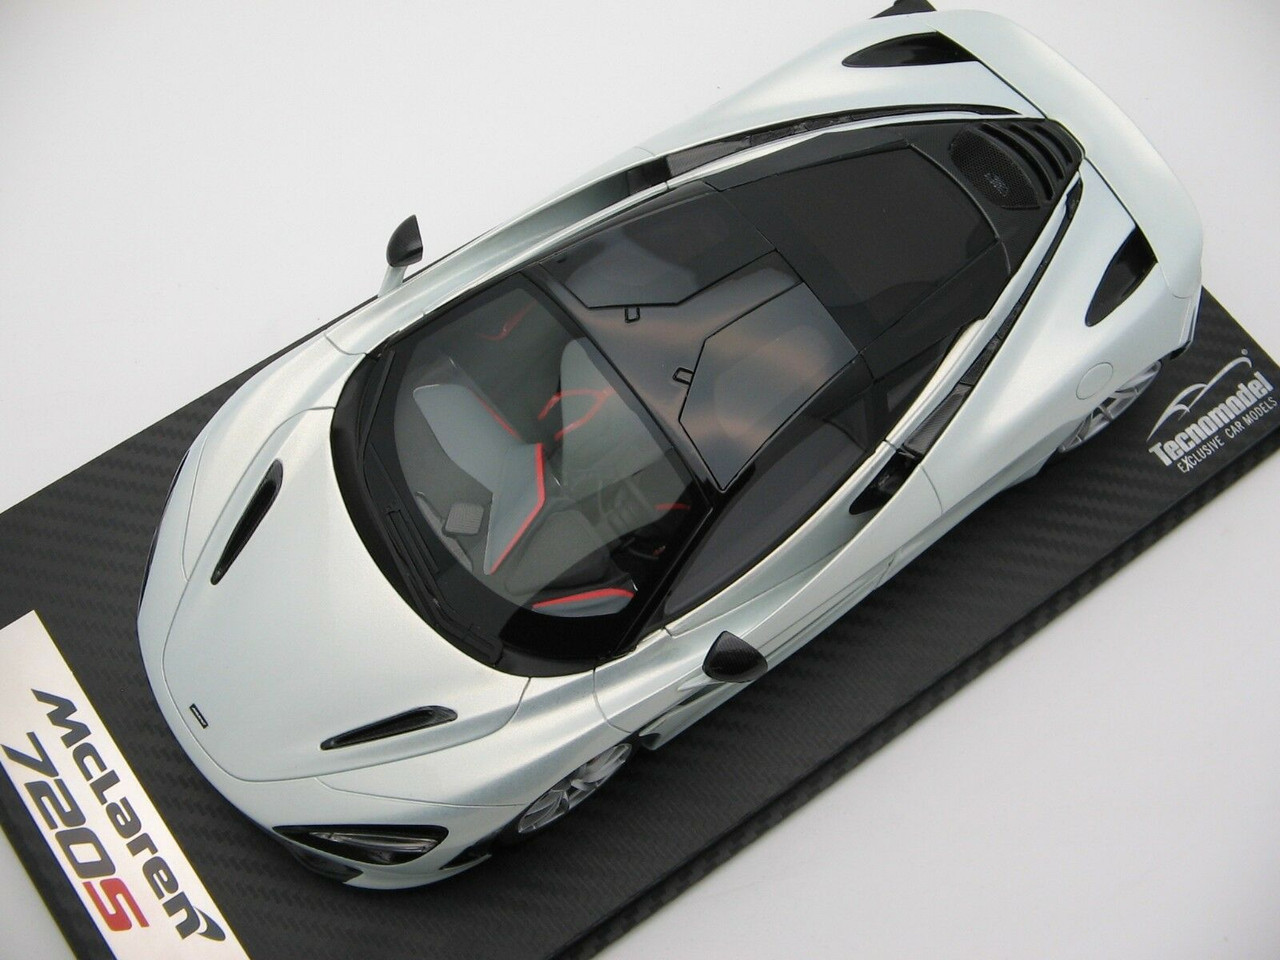 1/18 Tecnomodel McLaren 720S (Ice Silver) Resin Car Model Limited 49 Pieces